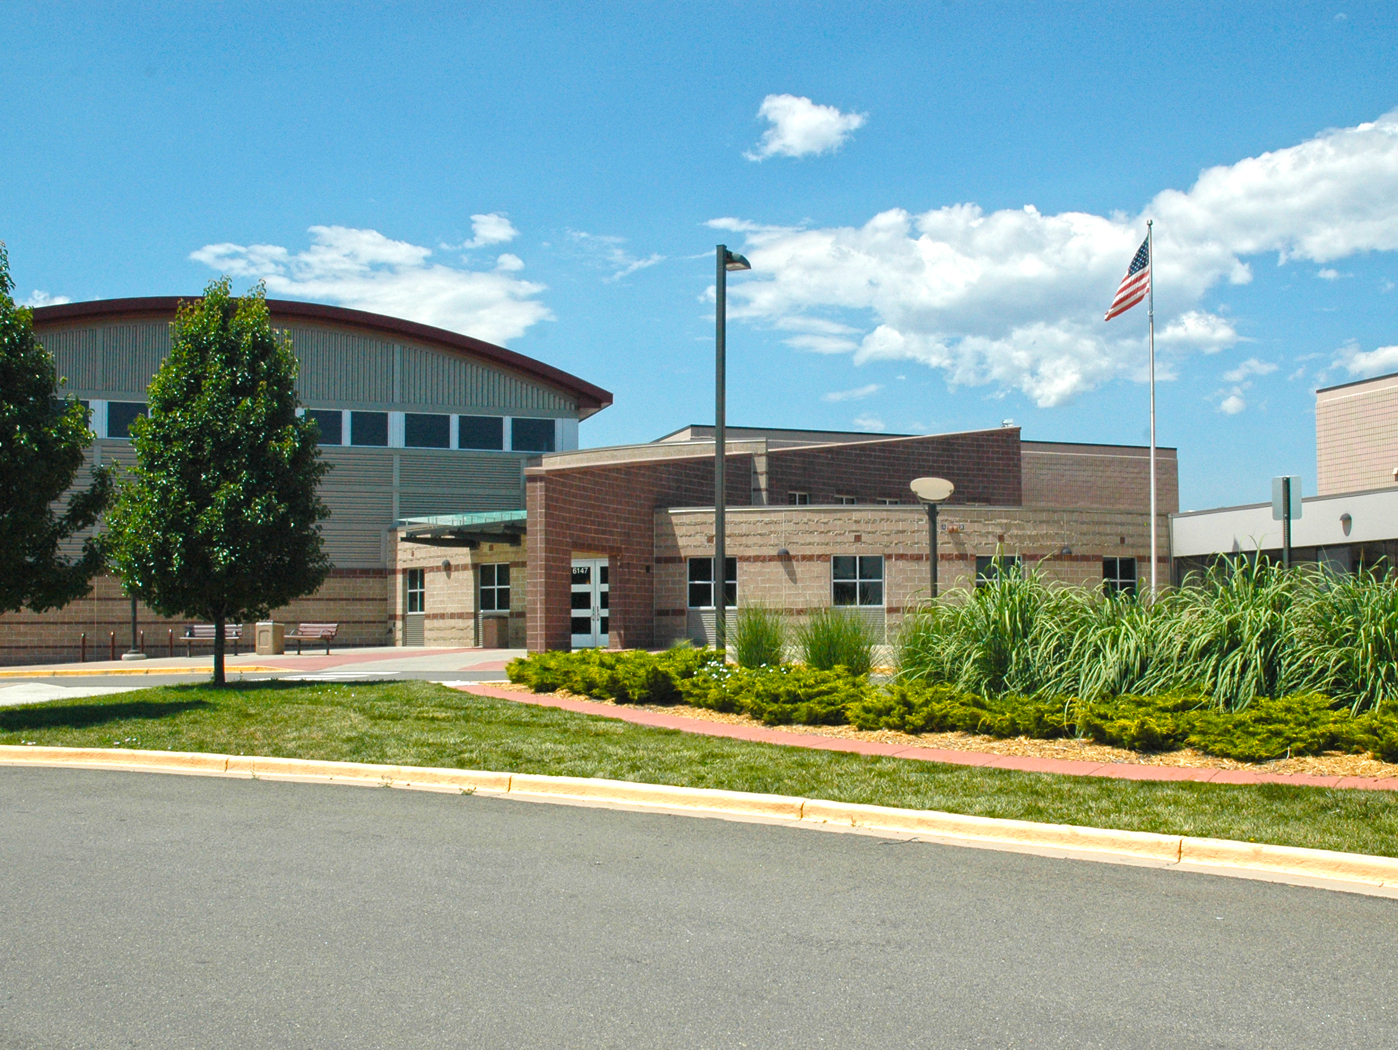 Lilley Gulch Recreation Center building.